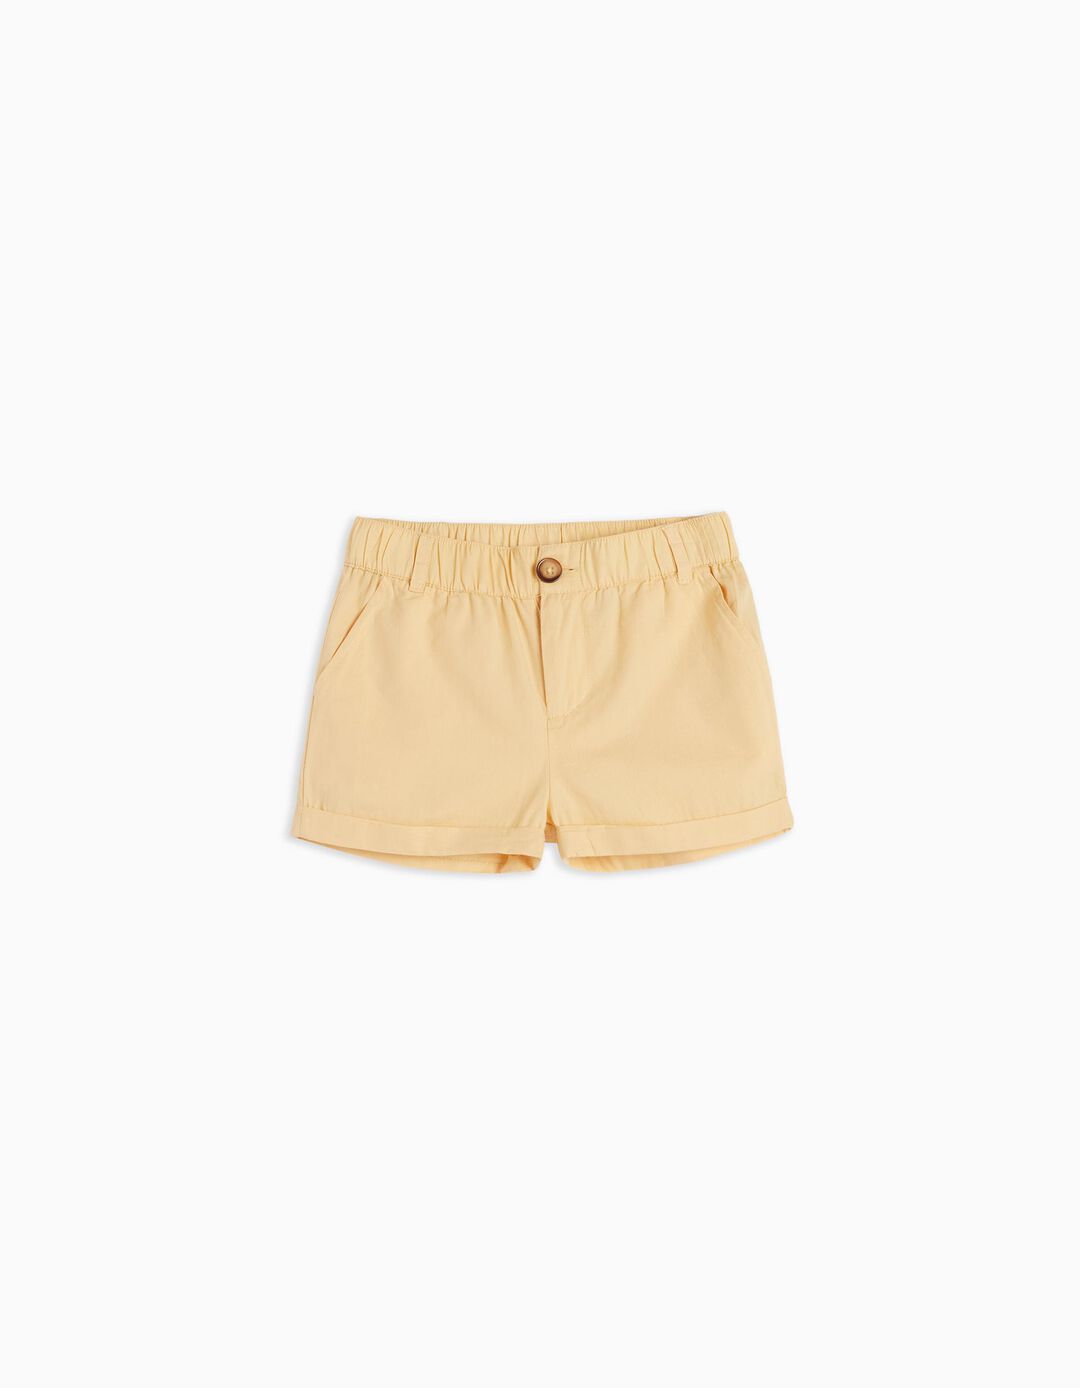 Shorts, Girls, Light Yellow